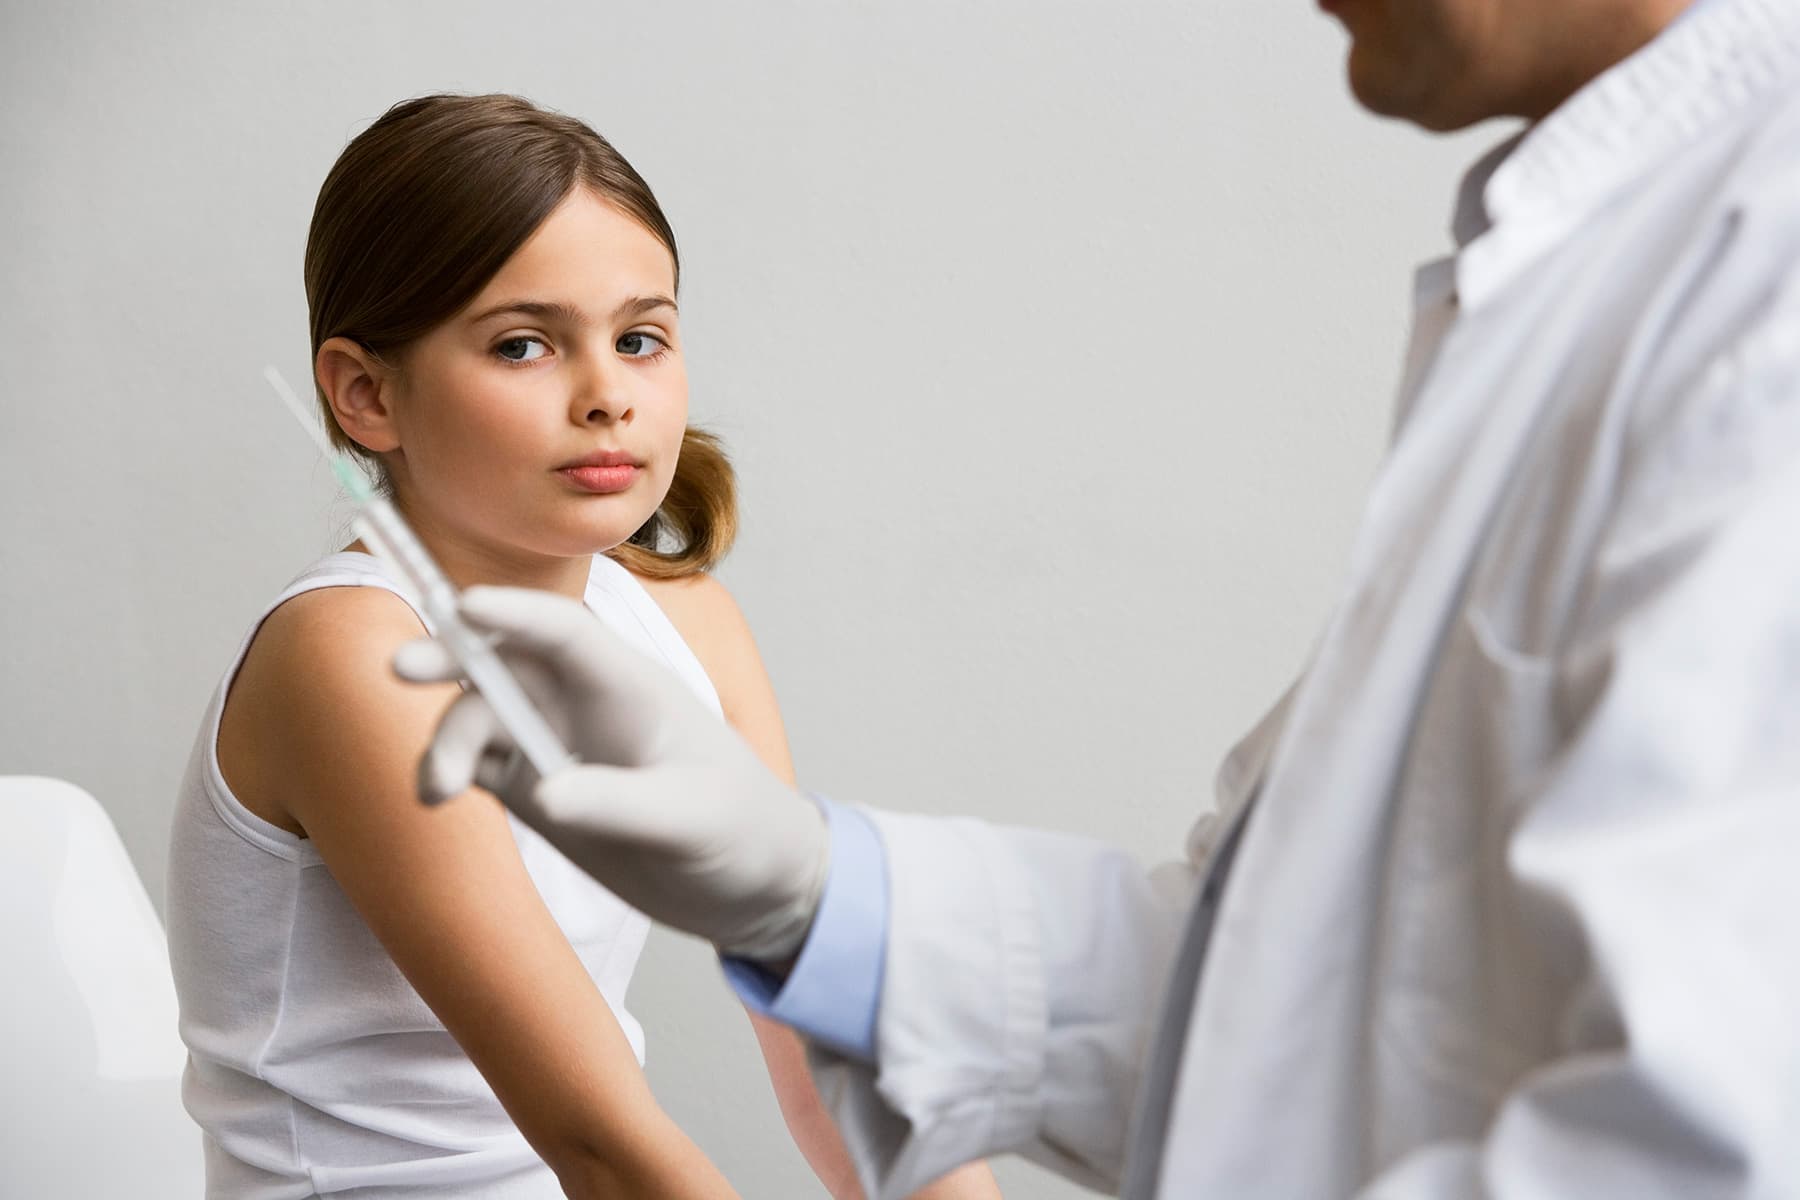 FDA Panel Votes to Approve Pfizer’s Vaccine for Children